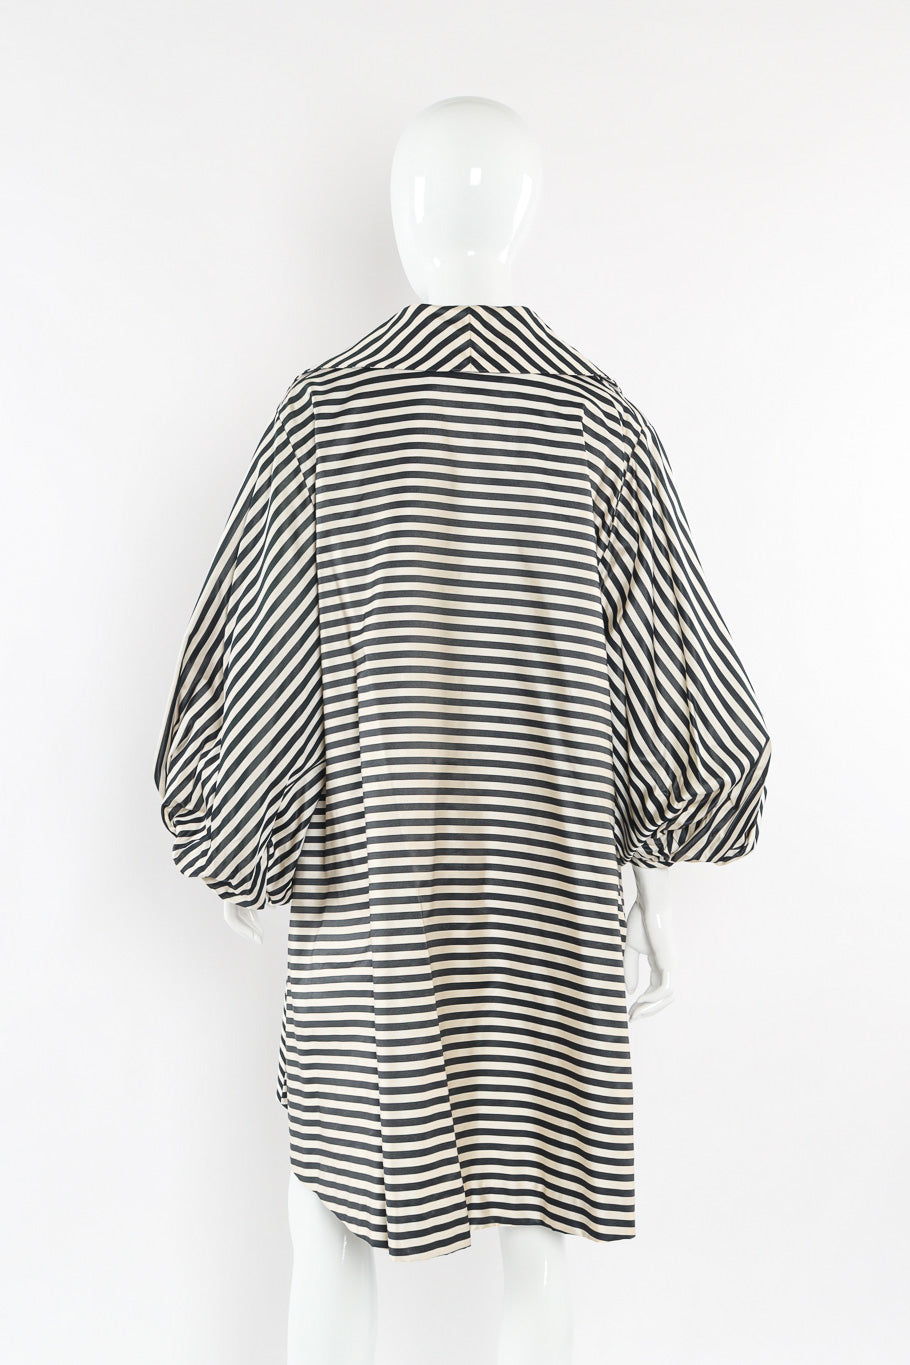 Oversized striped swing coat by Carolyne Roehm Back View @recessla